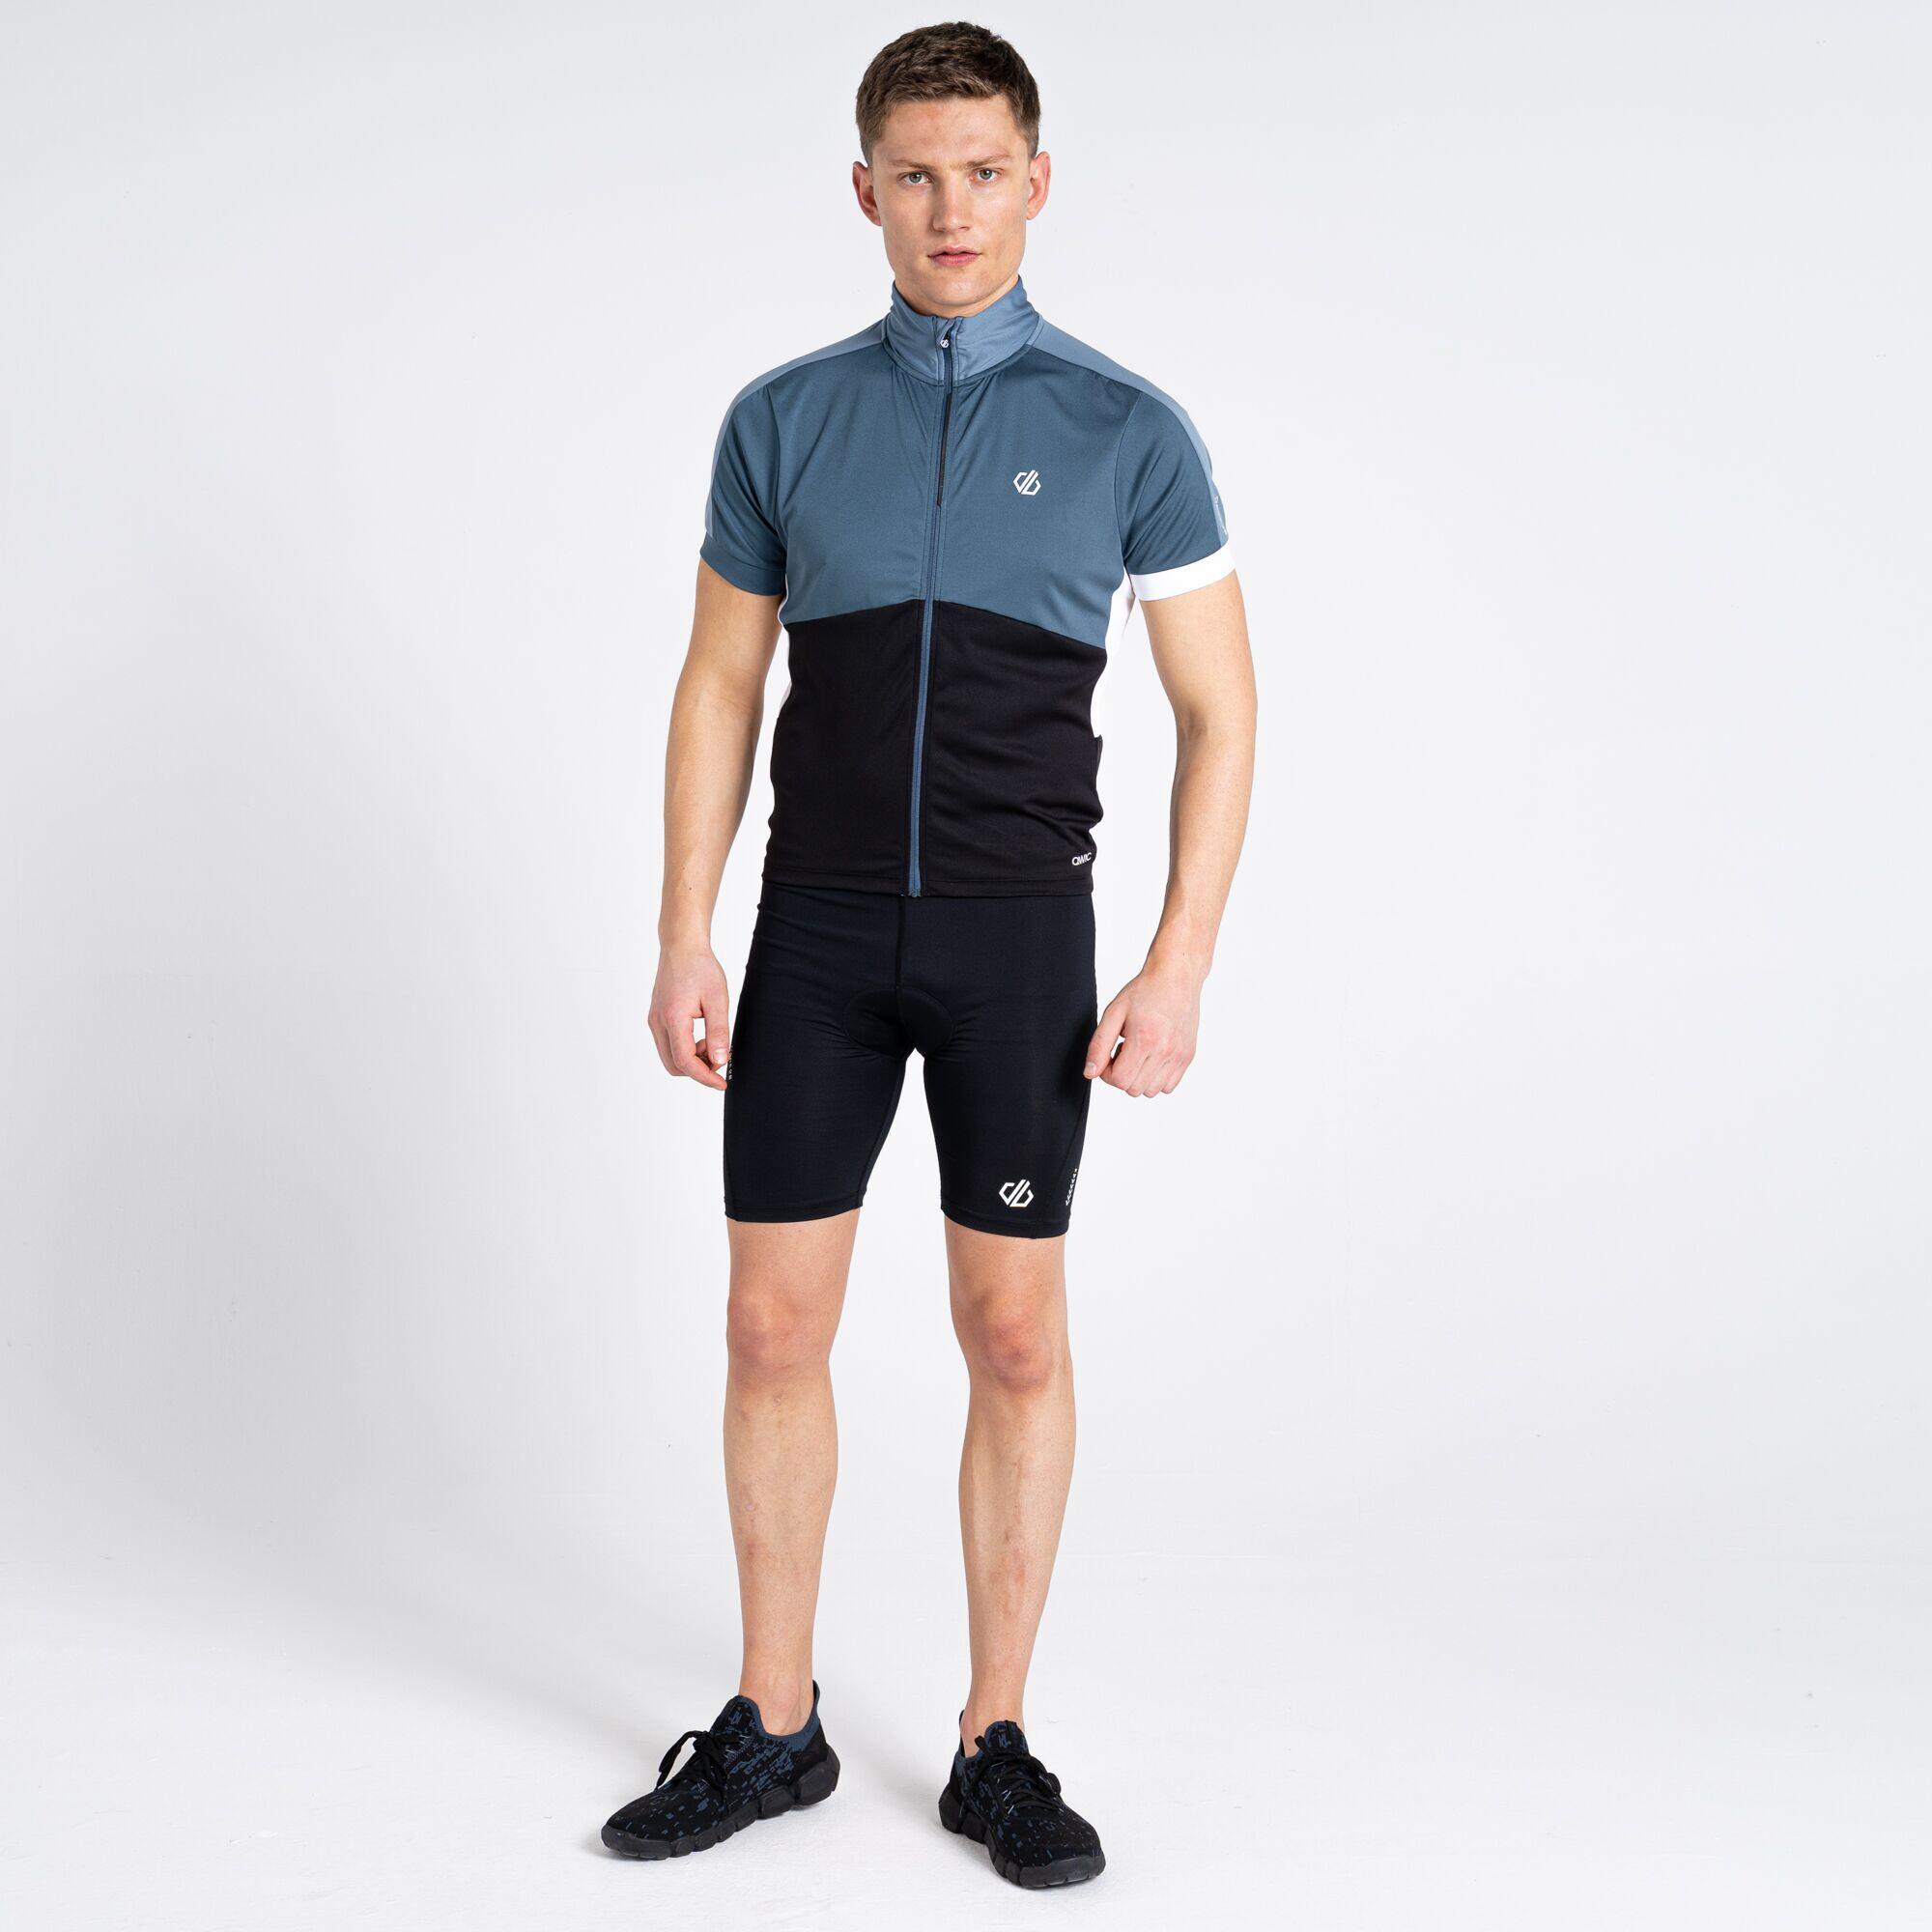 Protraction II Men's Cycling Full Zip Short Sleeve T-Shirt - Black / Grey 1/7